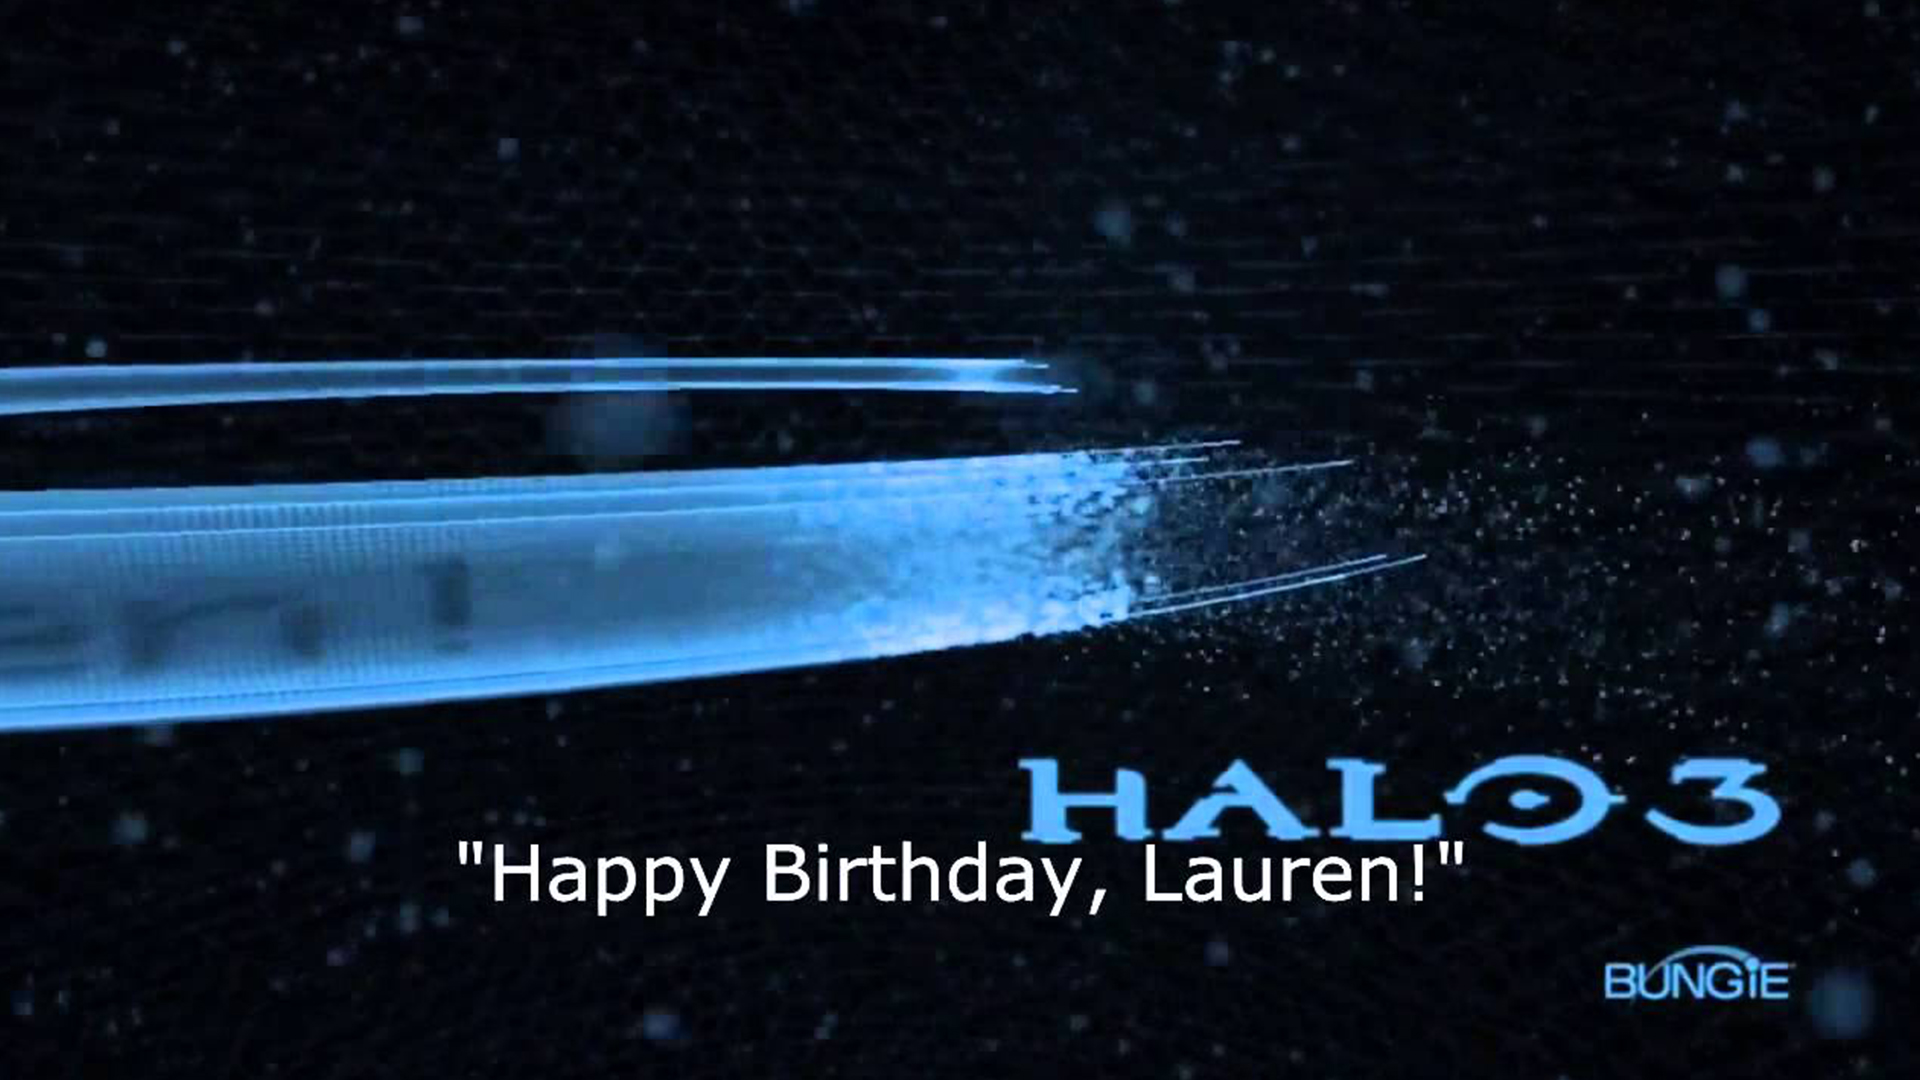 video game secrets  - Halo 3 (Birthday Wish)